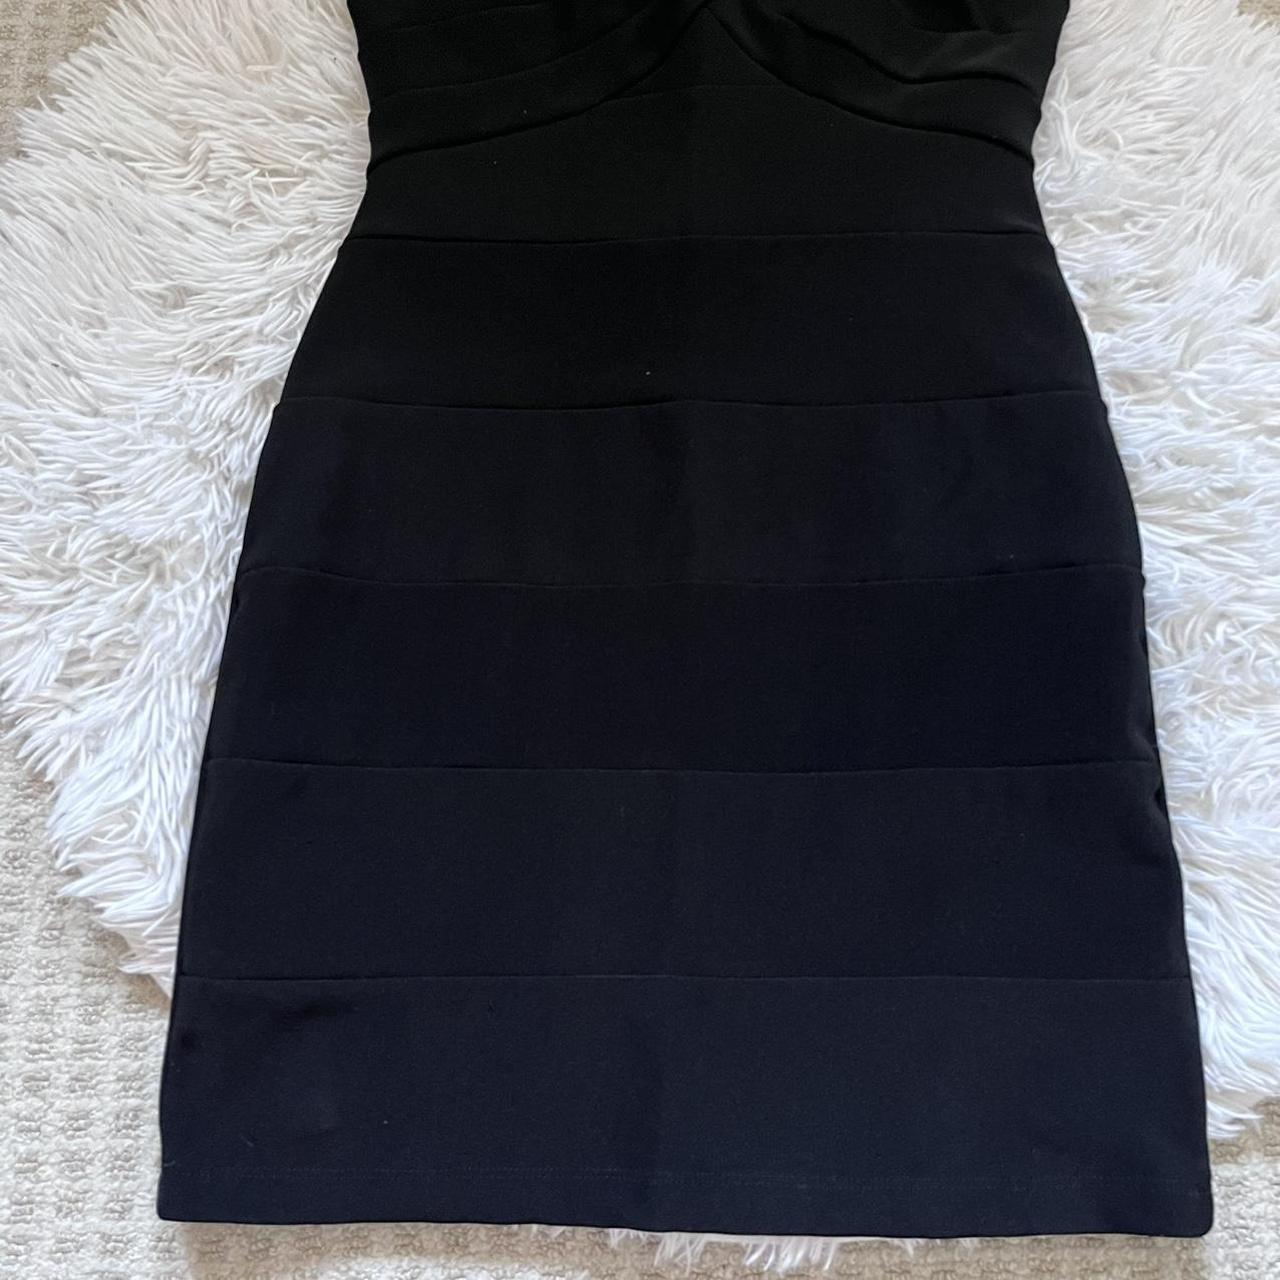 Product Image 2 - Gorgeous black mini dress perfect